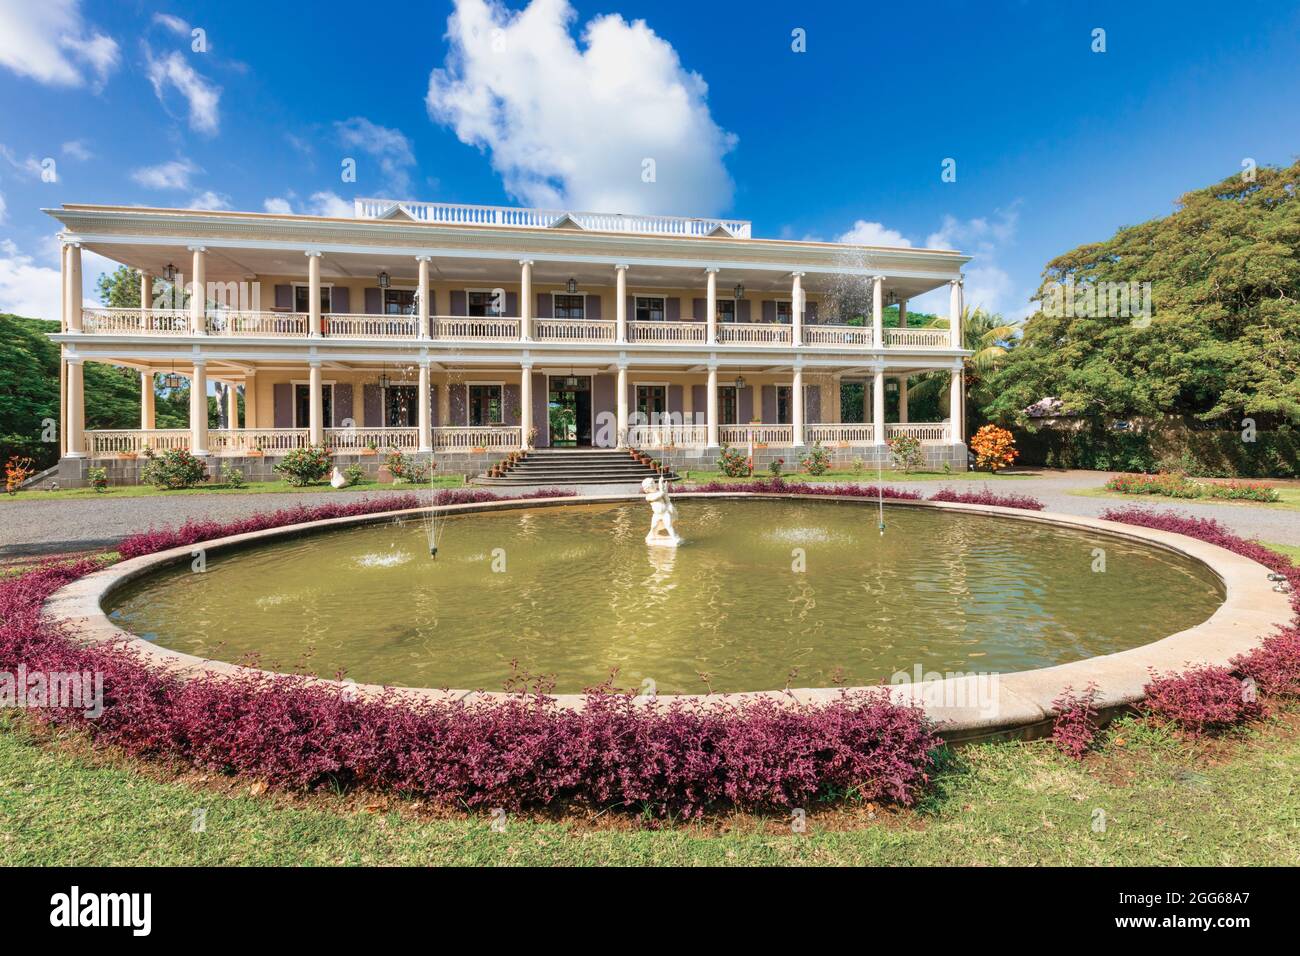 Mauritius chateau labourdonnais hi-res stock photography and images - Alamy